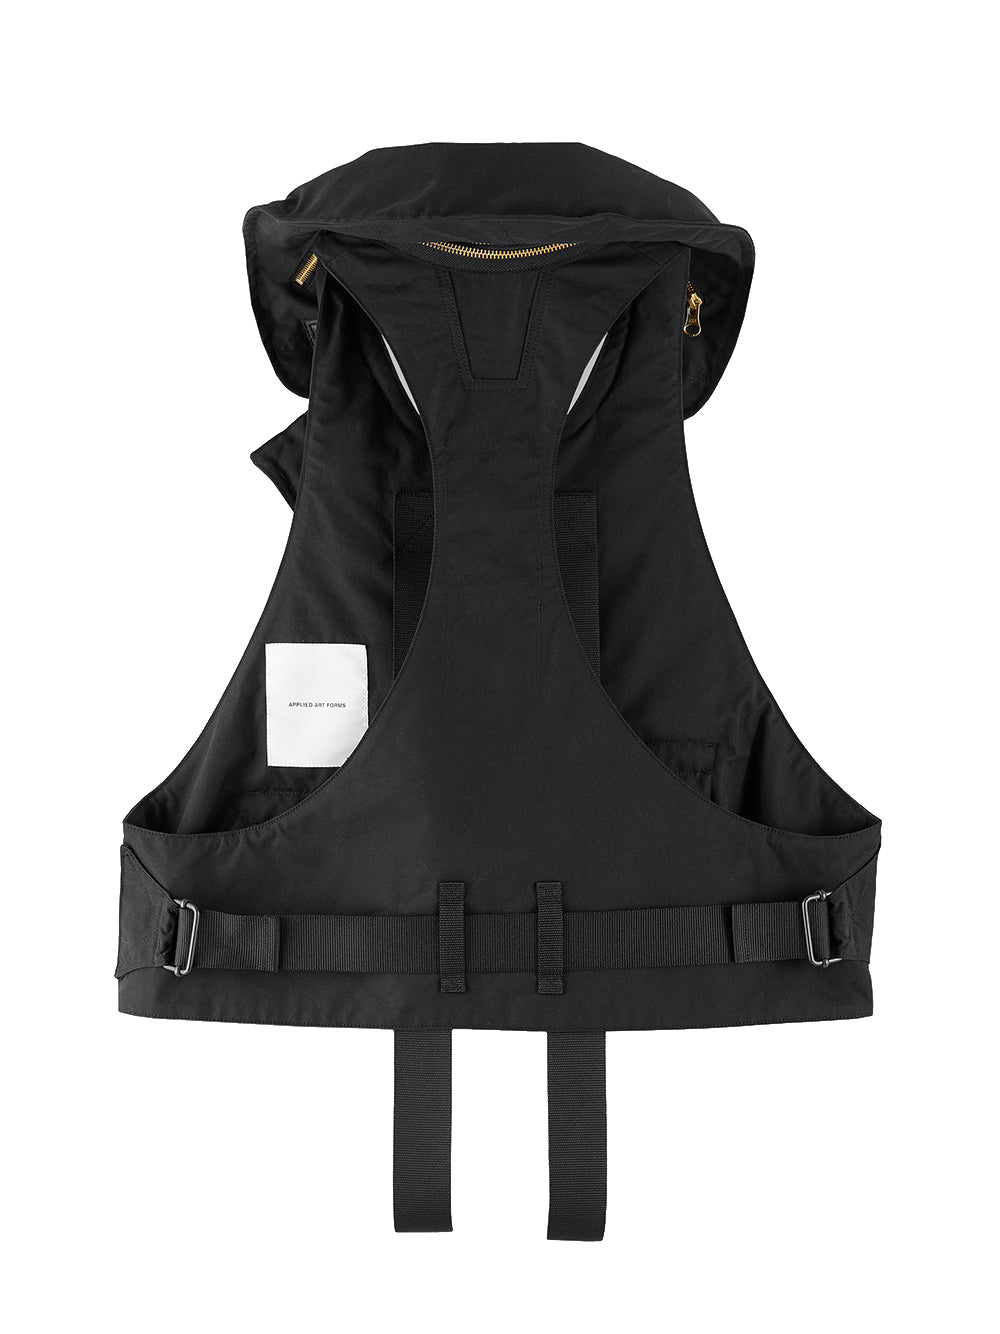 Rescue Vest (Black)